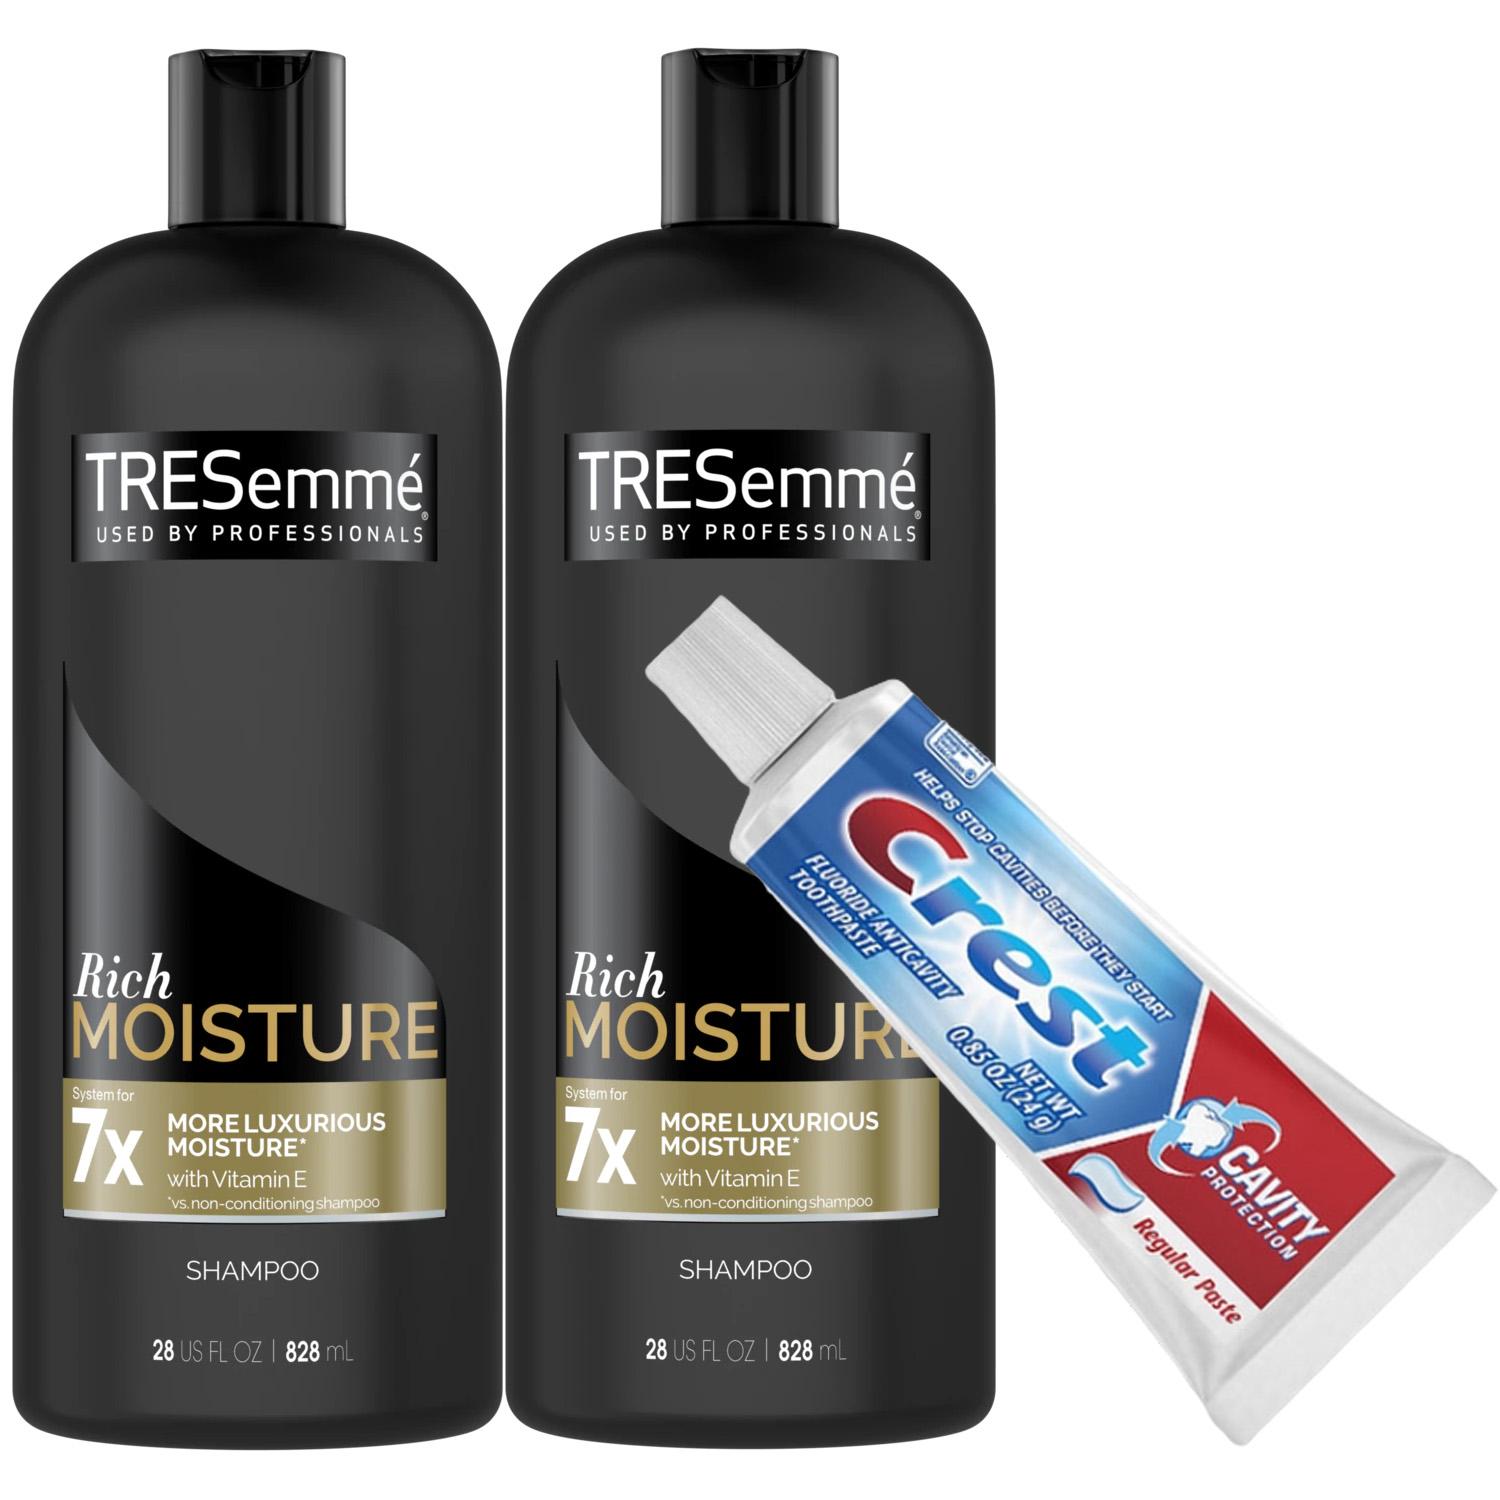 2 TRESemme Shampoo Conditioner + Crest Toothpaste + $5.10 Rewards for $4.98